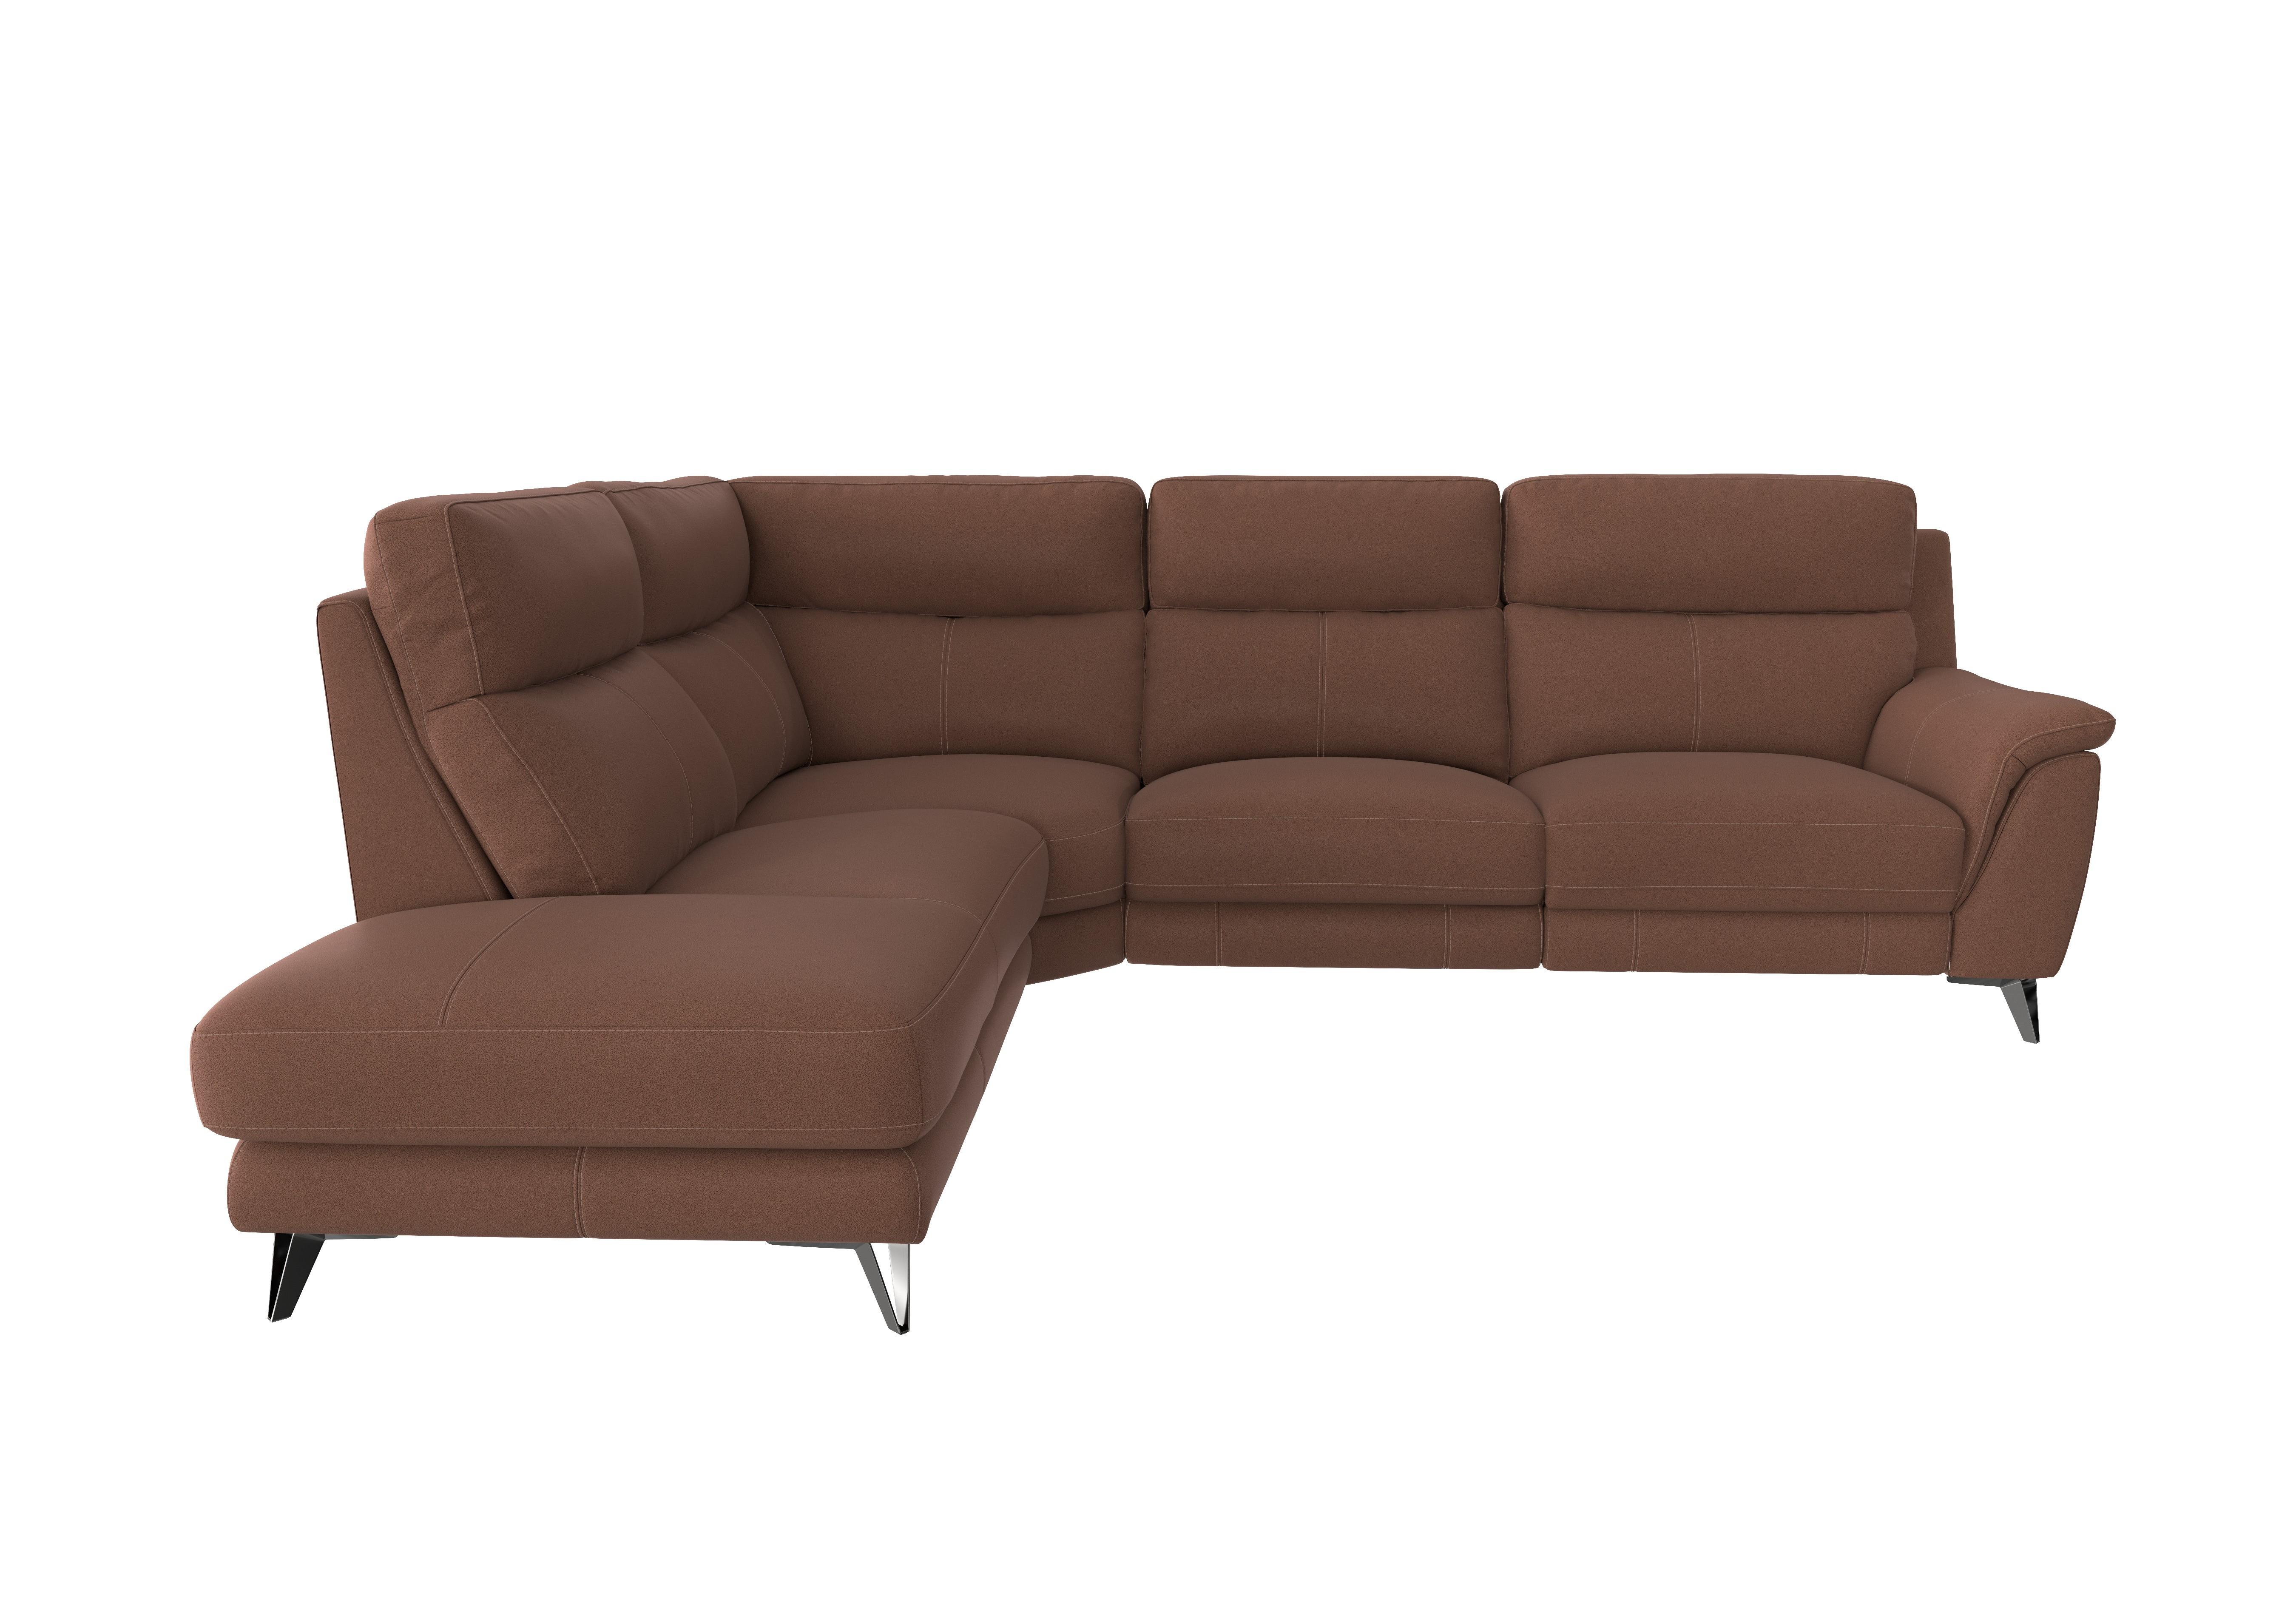 Contempo 3 Seater Chaise End Fabric Sofa in Bfa-Blj-R05 Hazelnut on Furniture Village